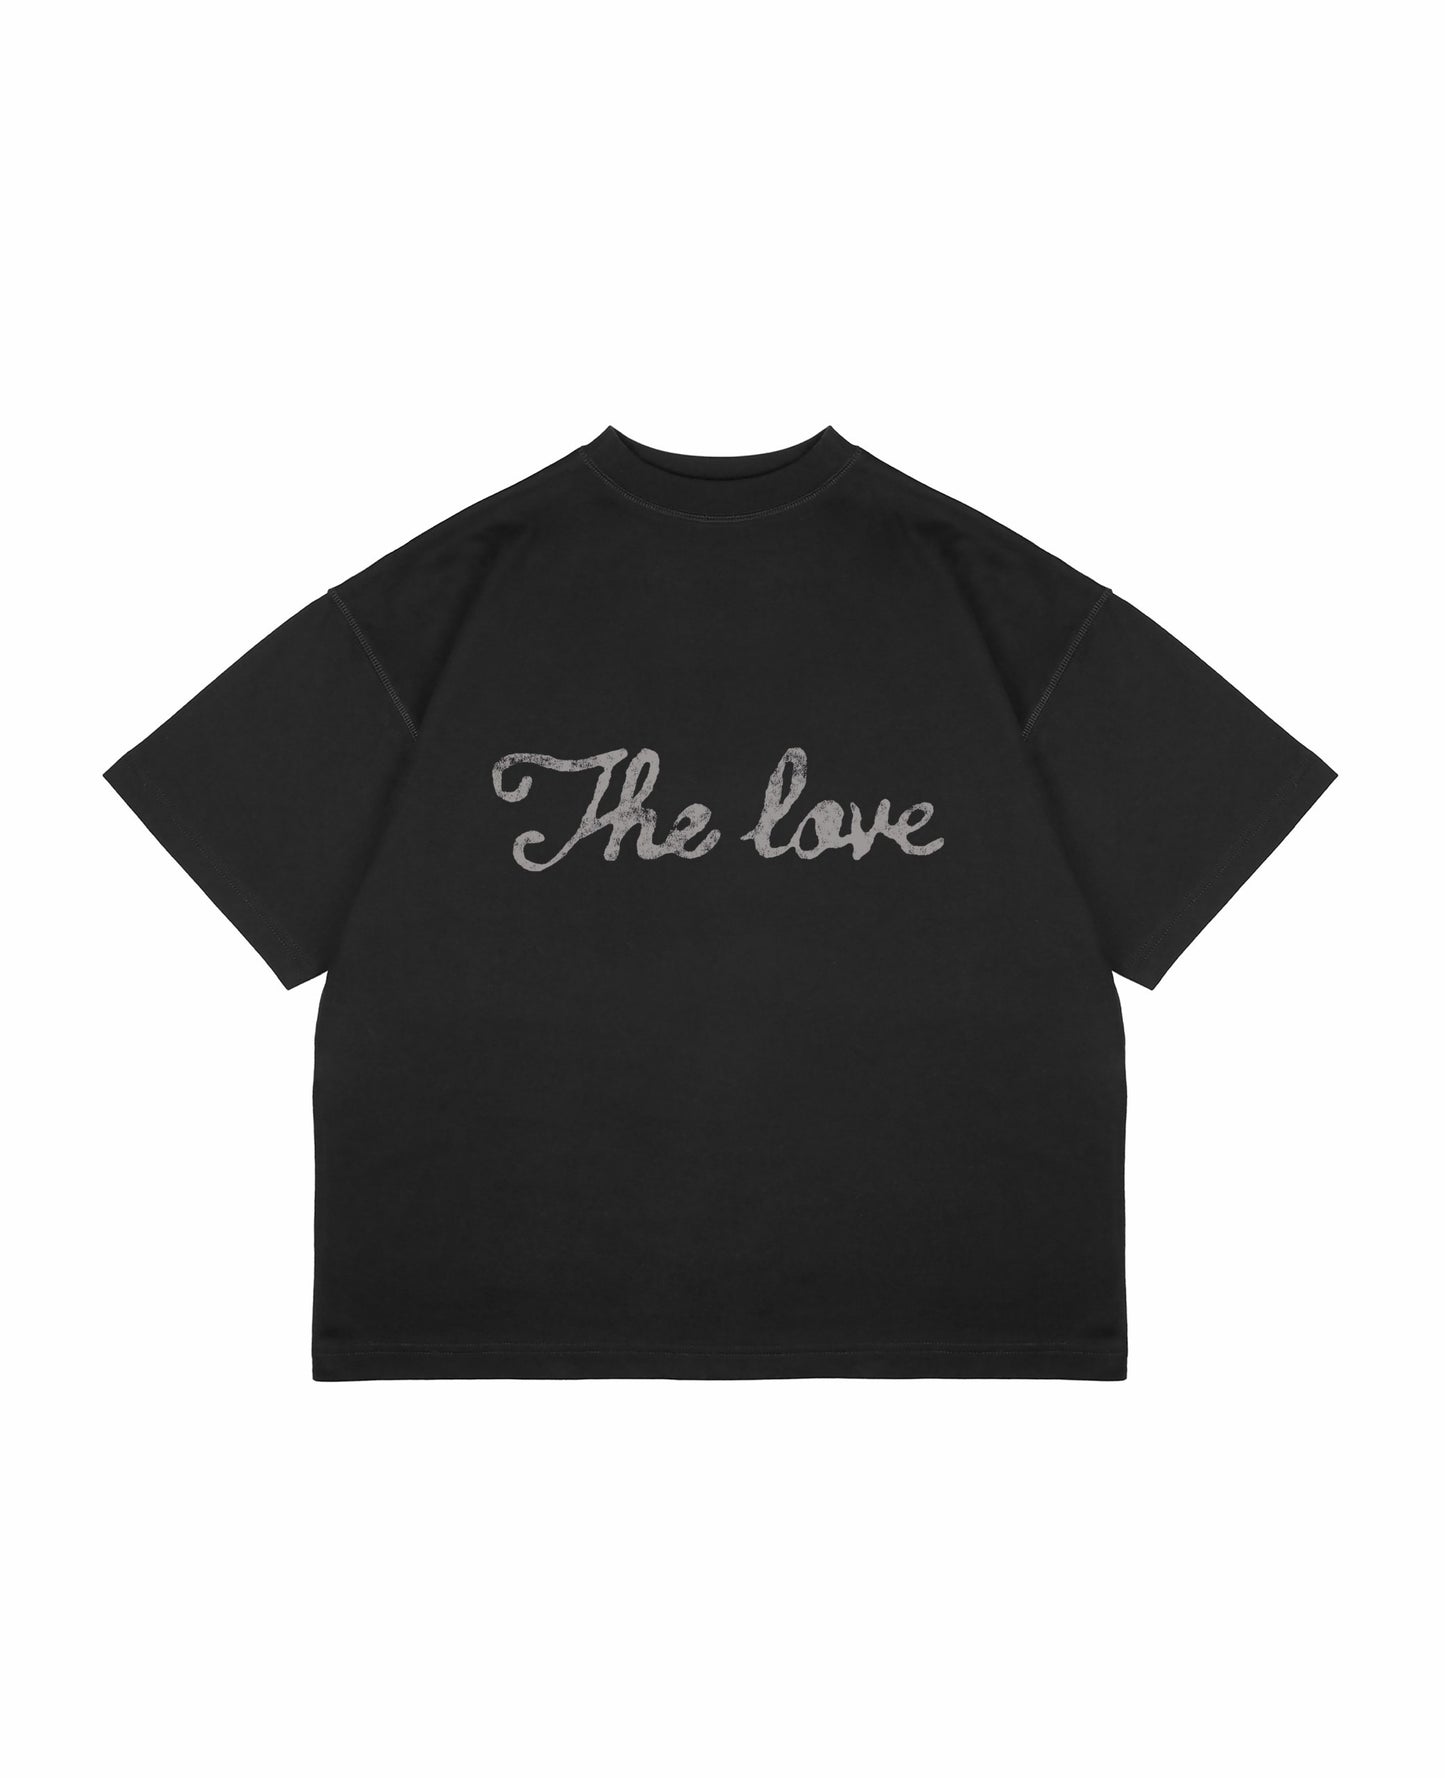 The love t-shirt